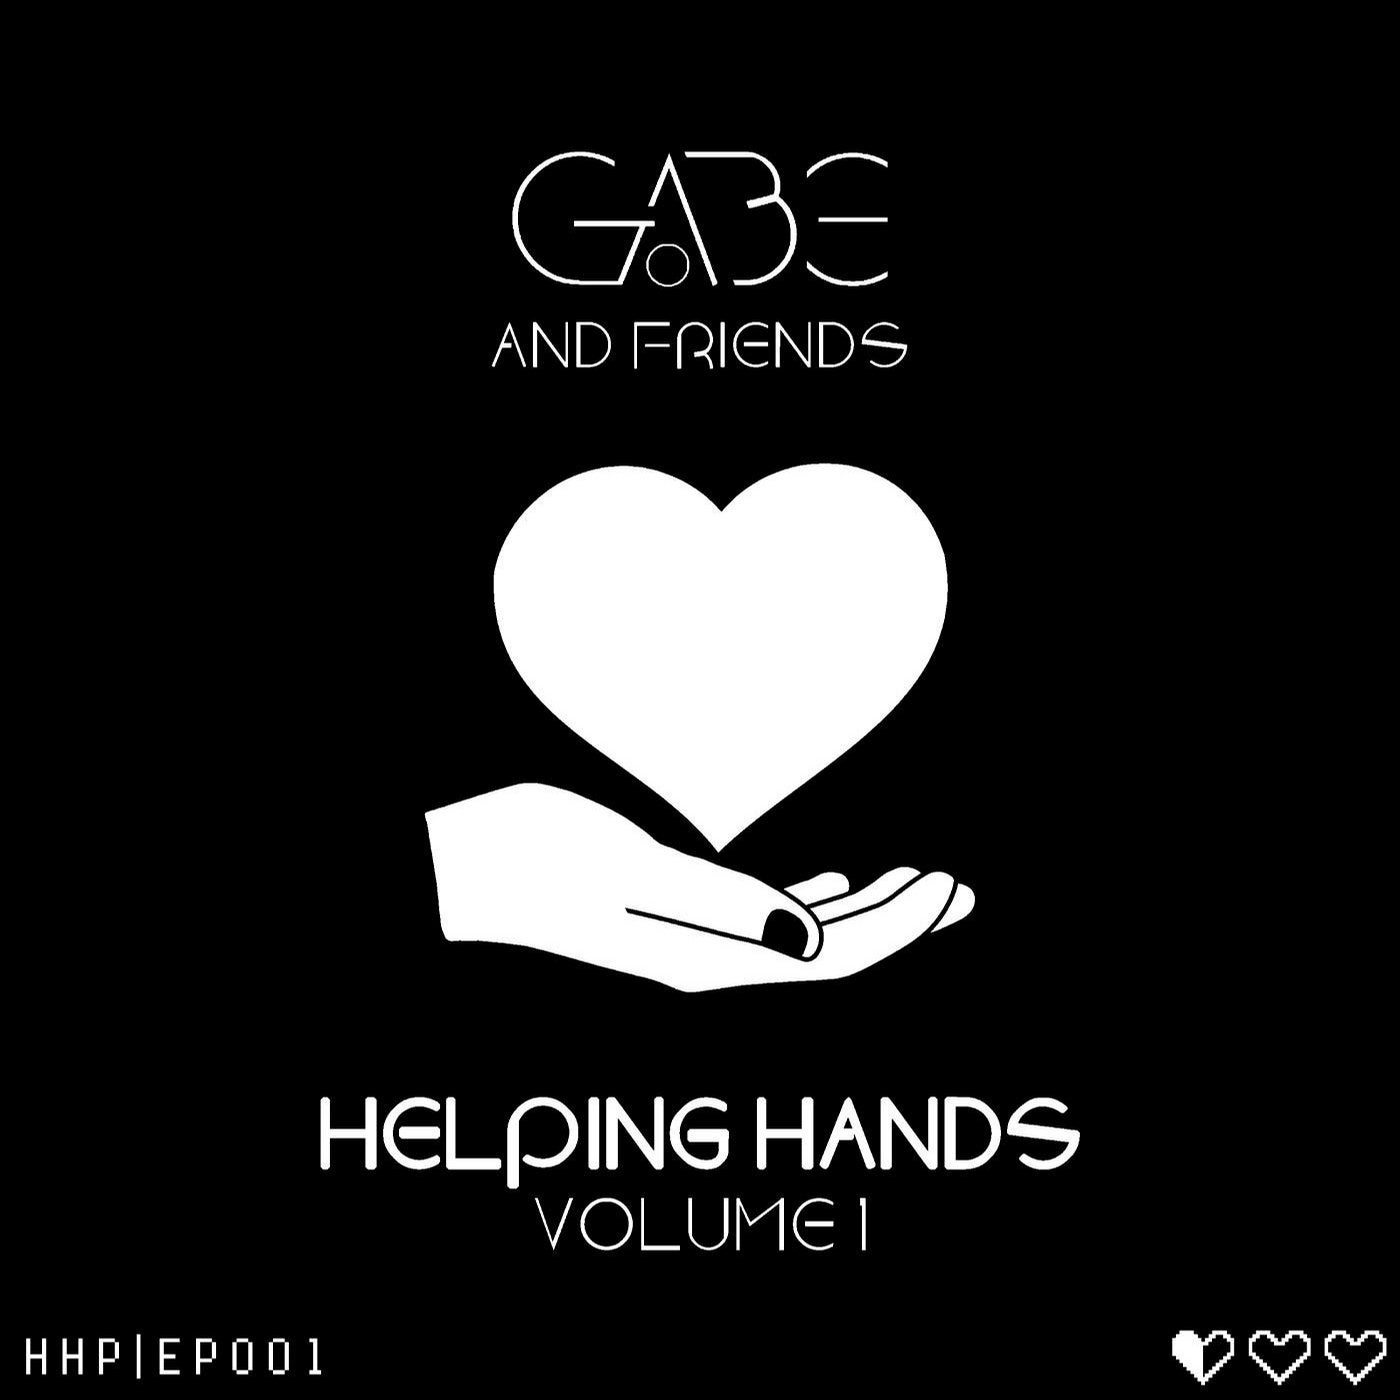 HELPING HANDS: VOLUME 1